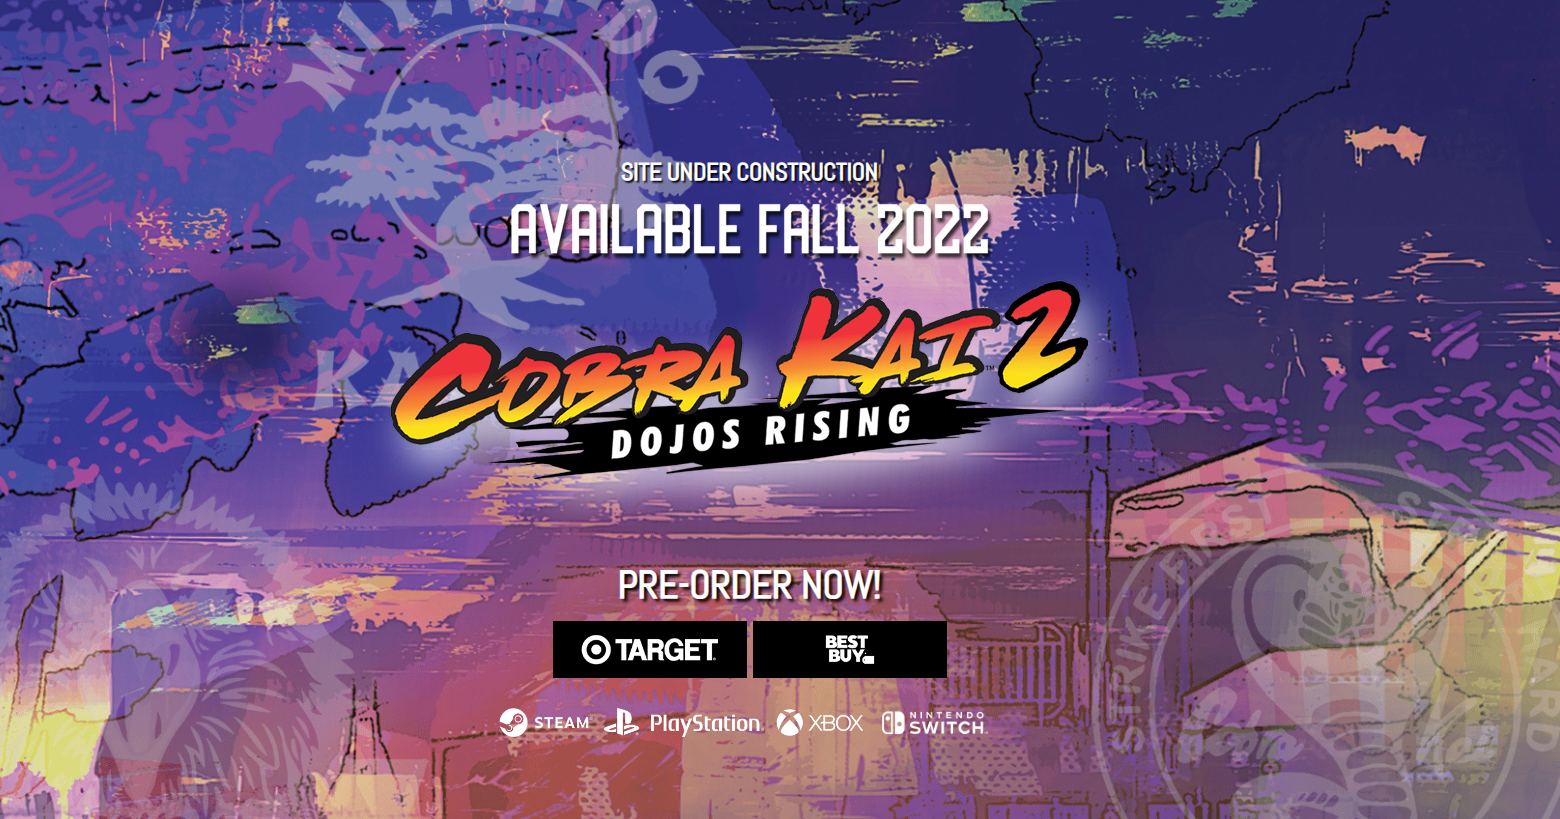 Here we see a cover of Cobra Kai 2: Dojos Rising.